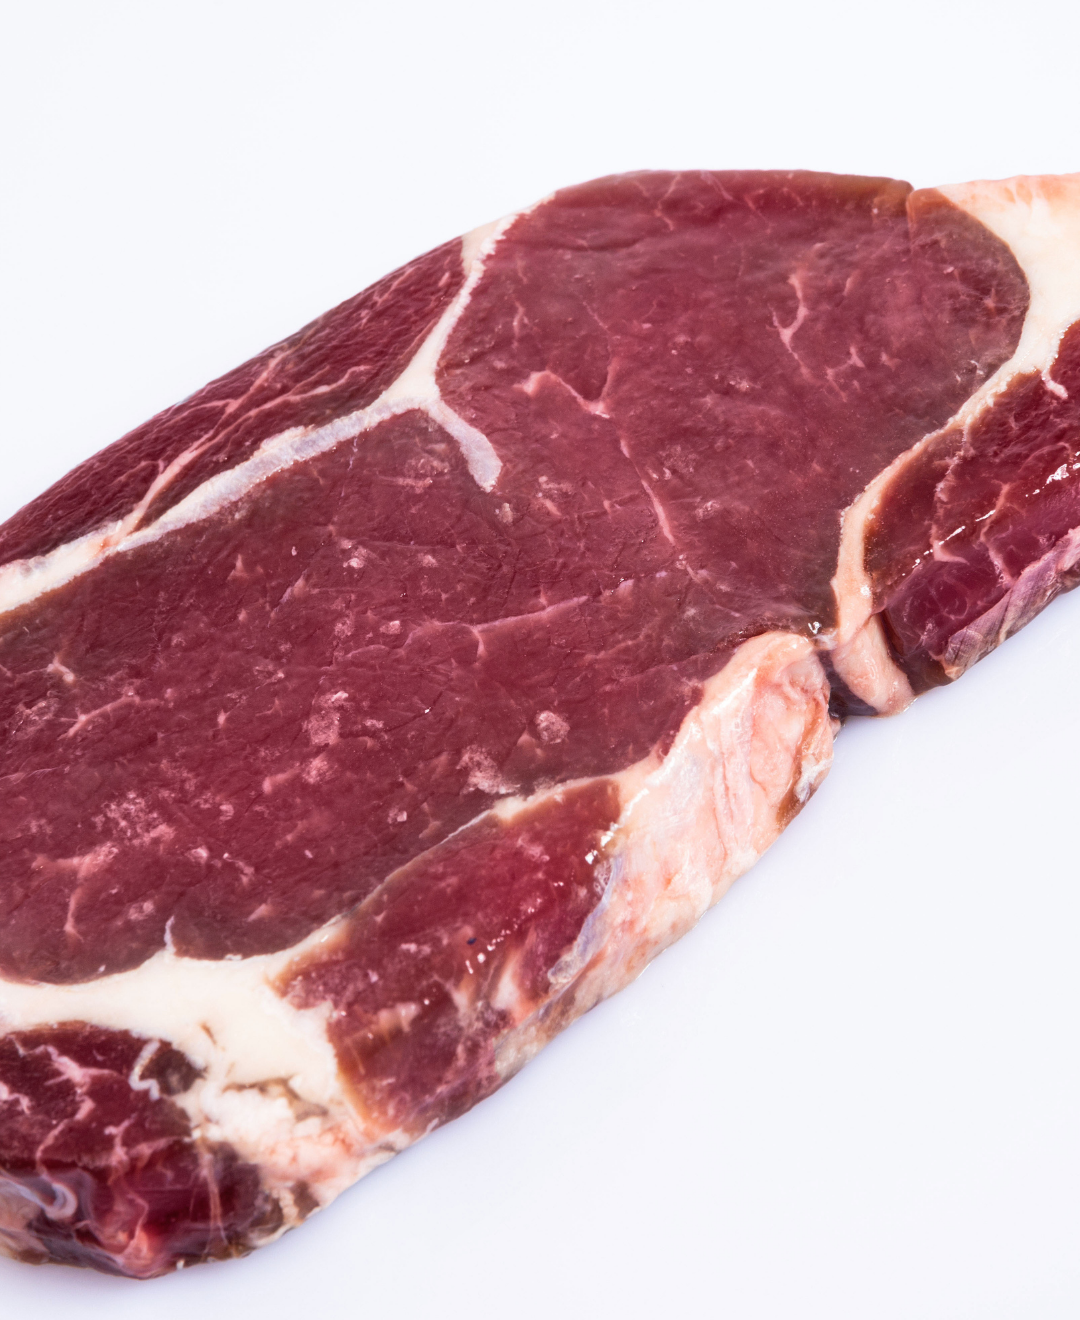 USDA Ribeye Butter-Aged Steak 495g (1.5" per cut, 1 slice)